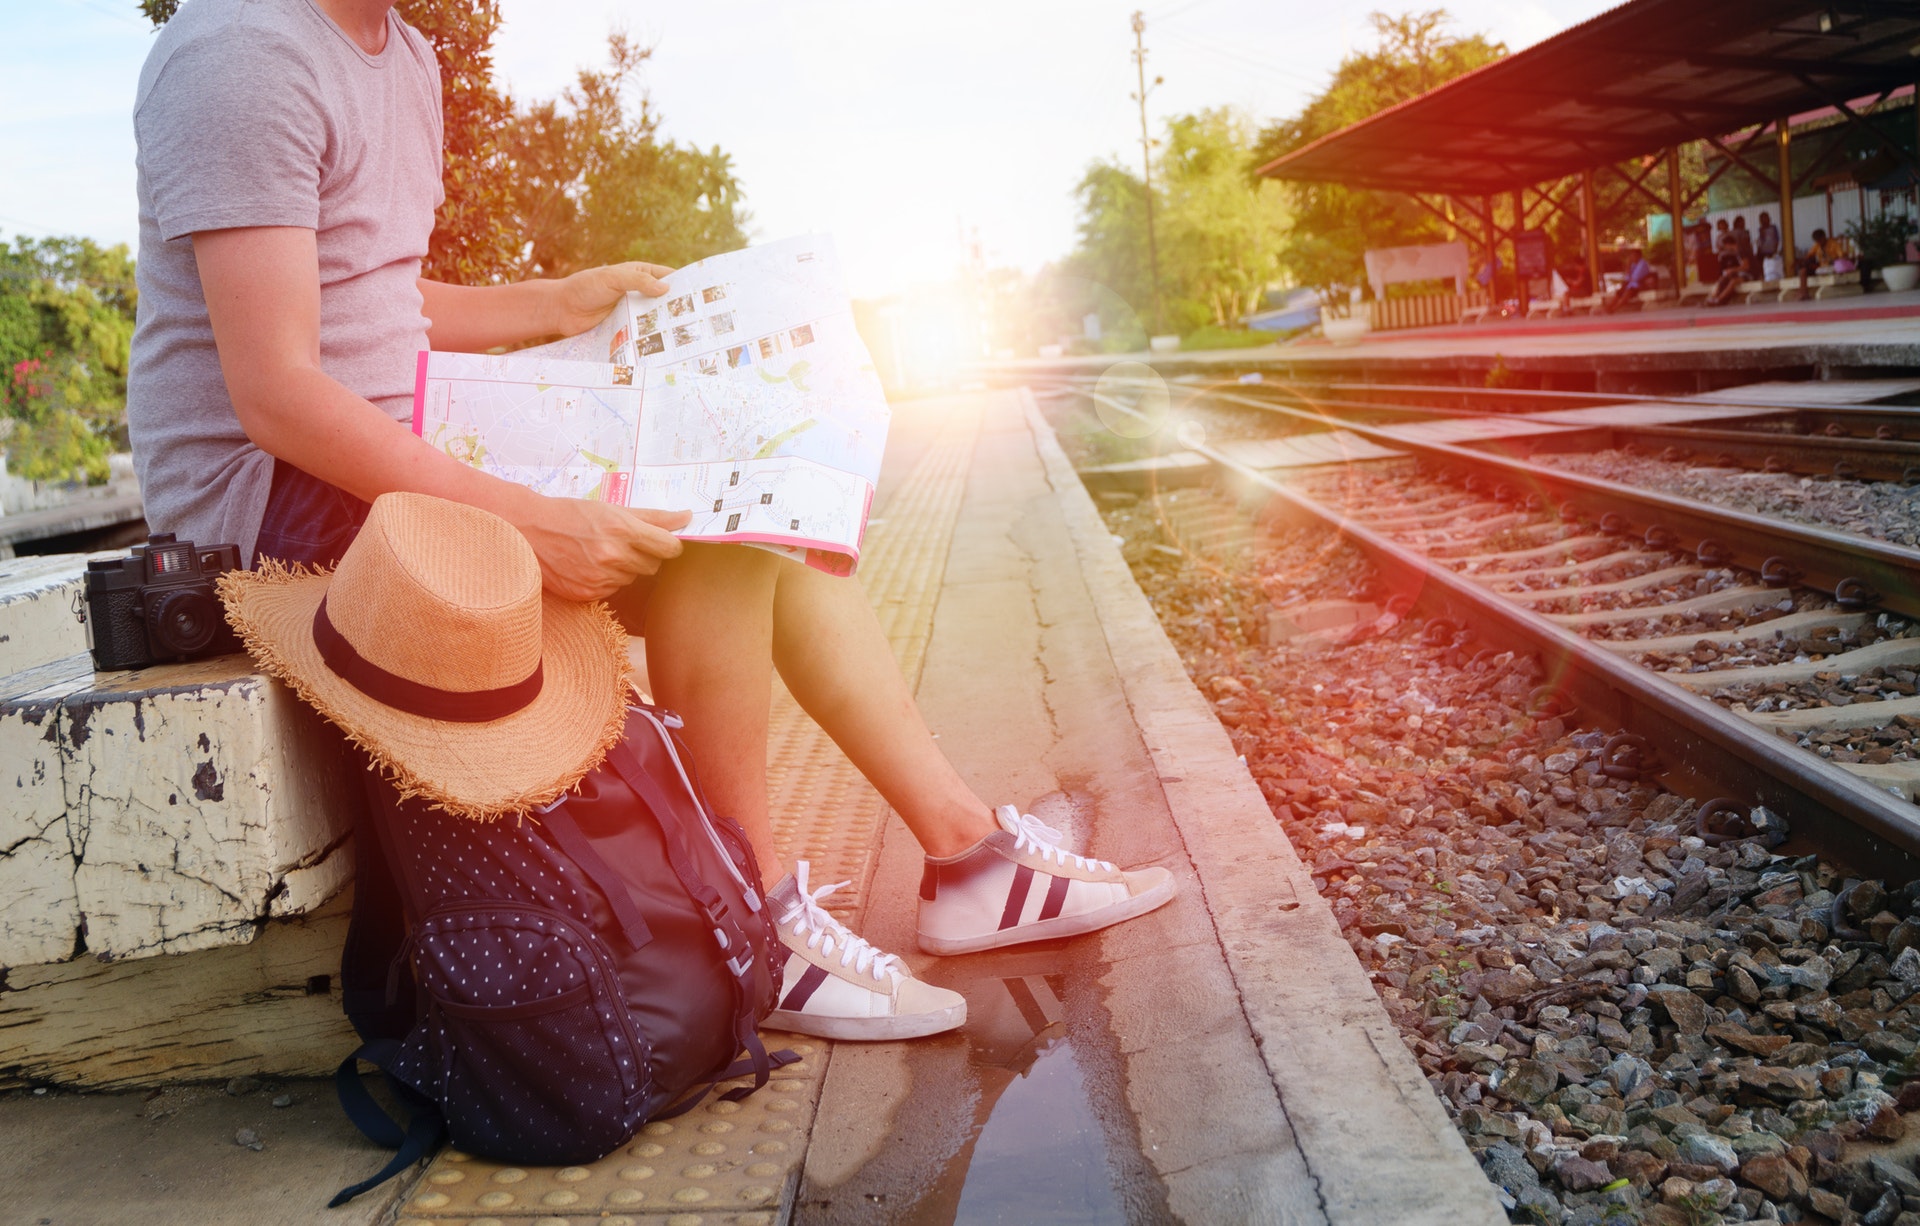 Backpack and traveler sitting near rails